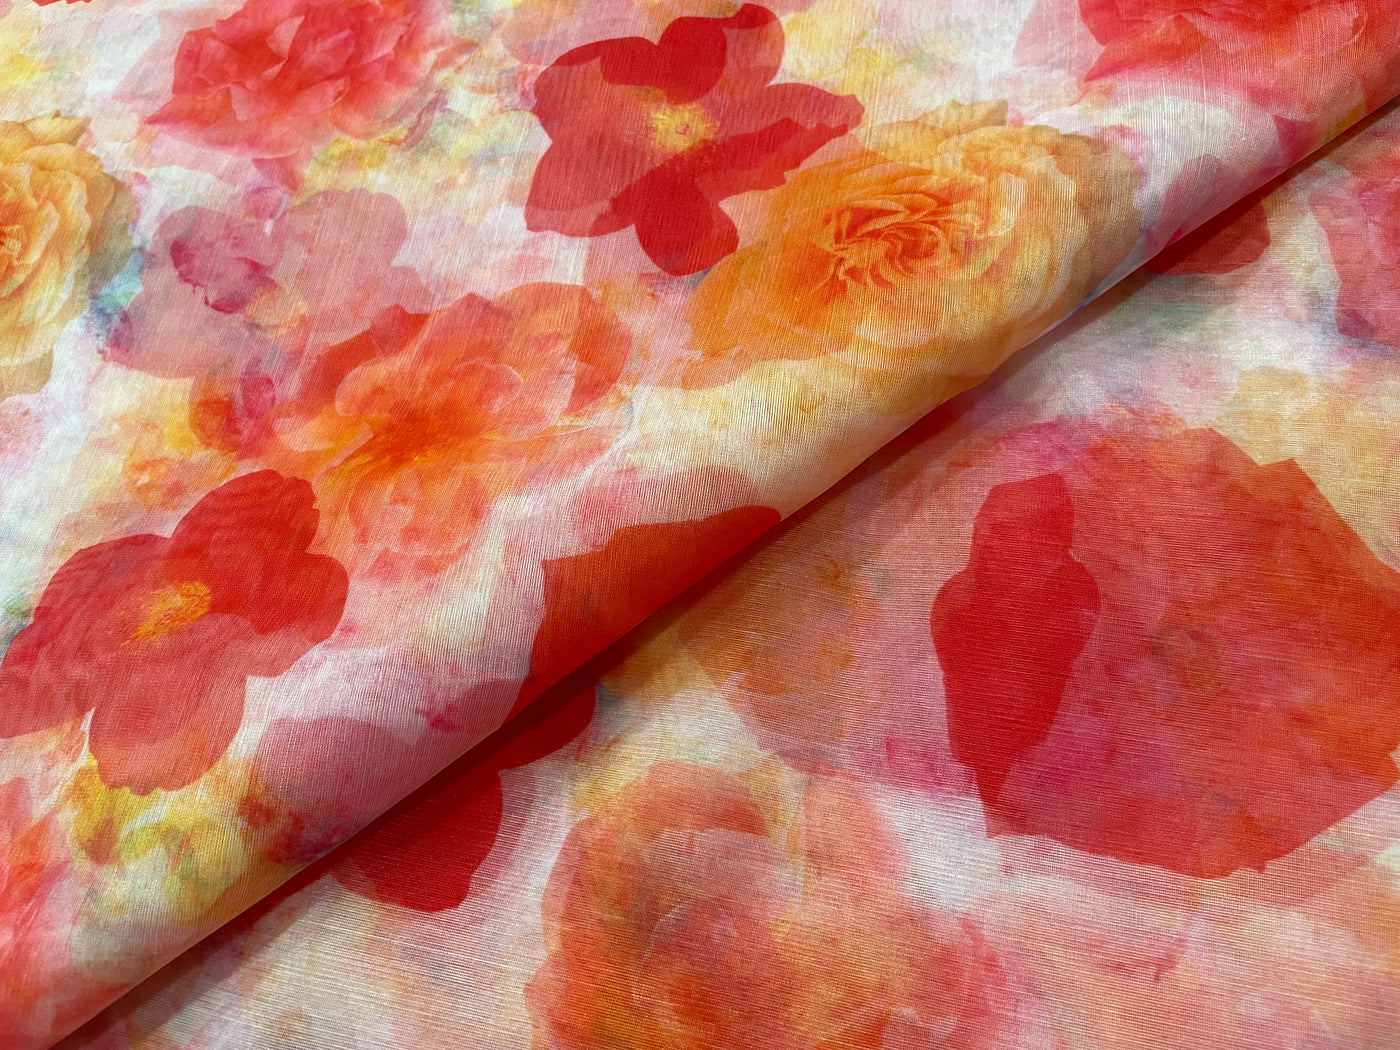 Red & Orange Floral Printed Organza Fabric